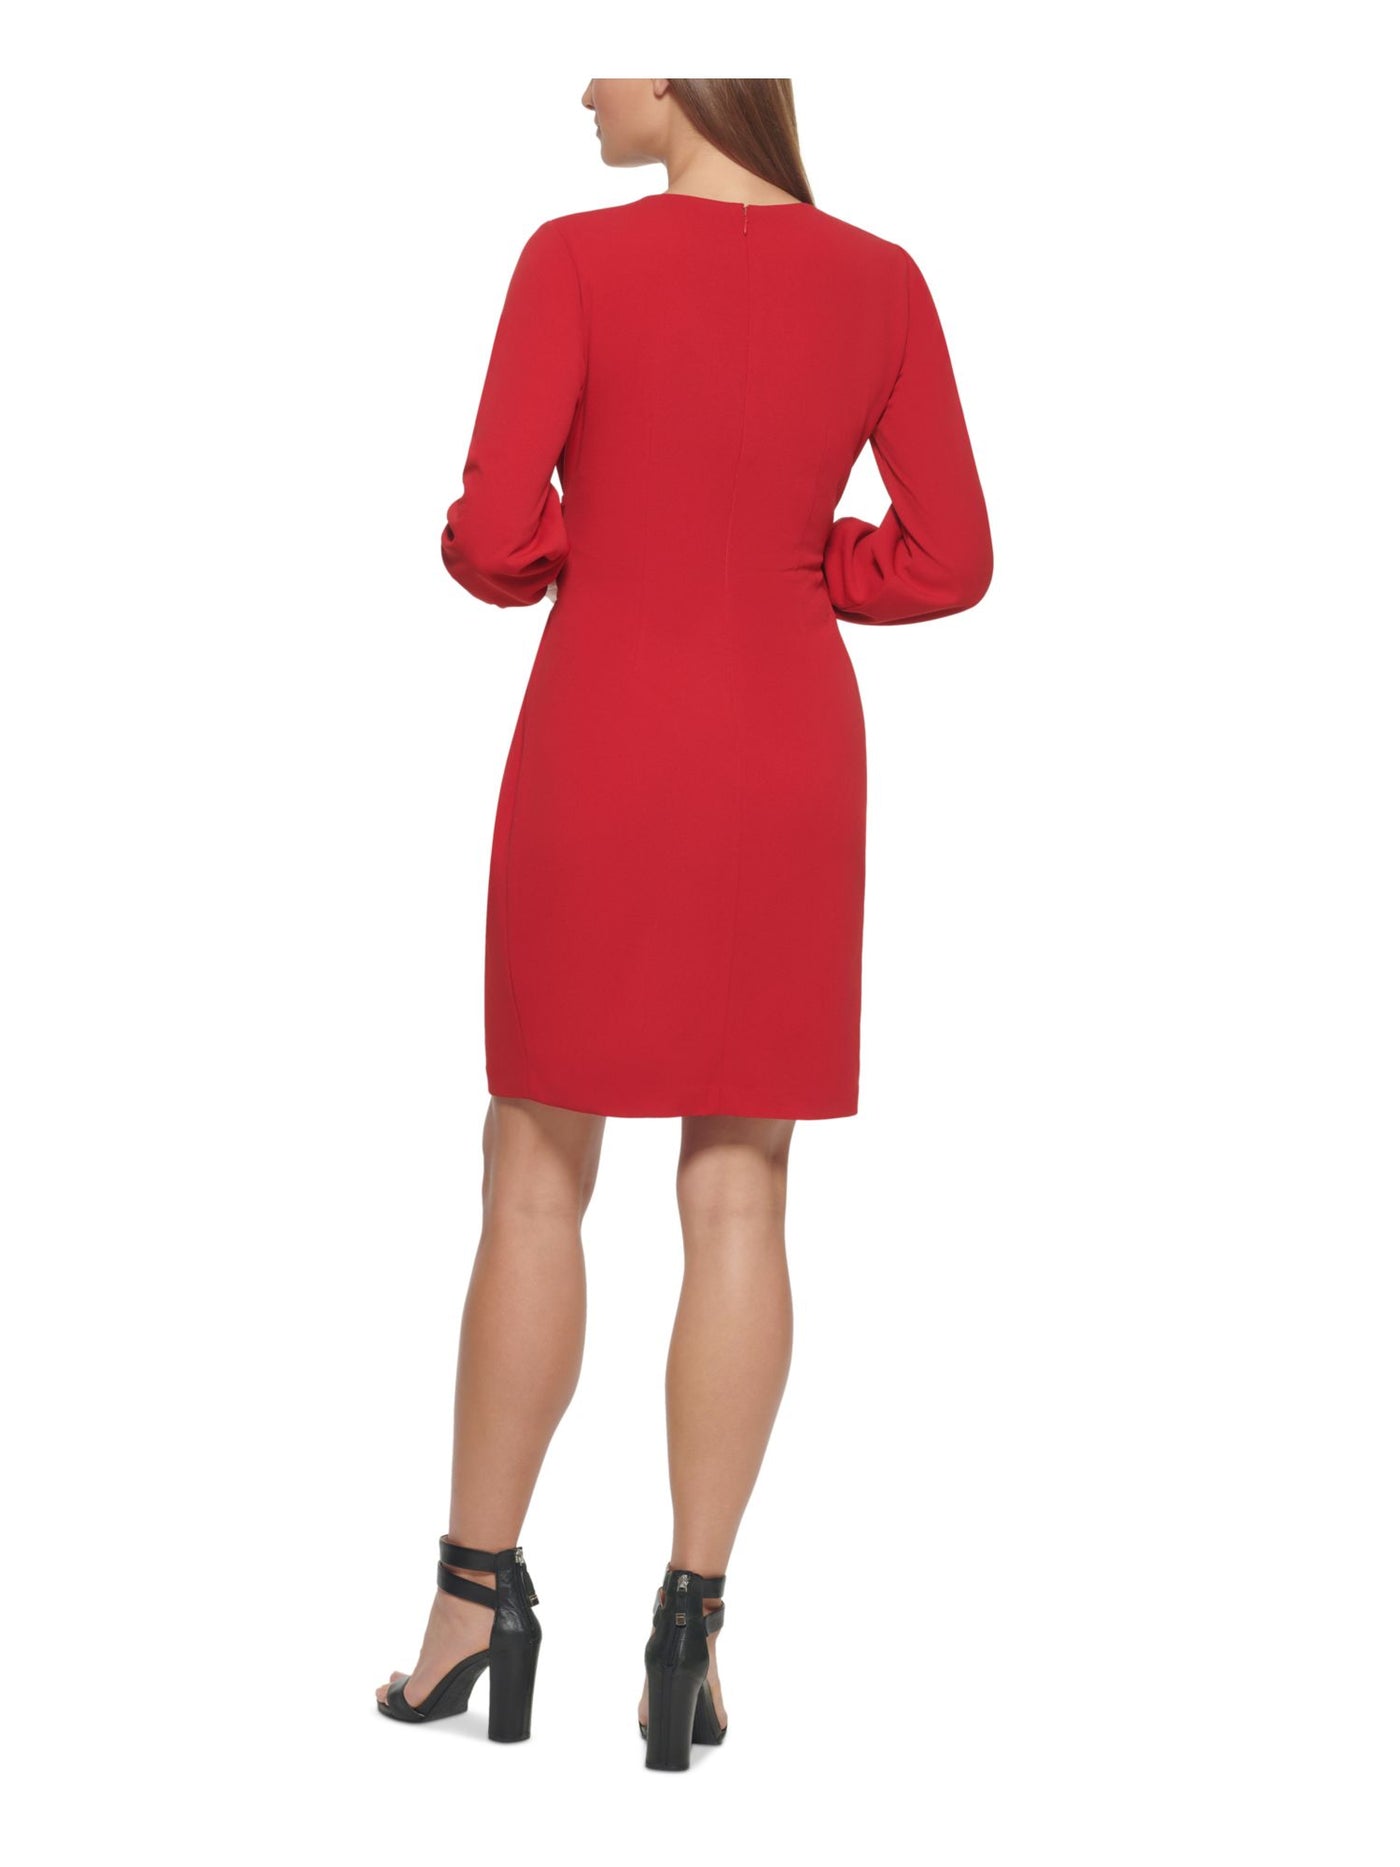 DKNY Womens Red Stretch Zippered Twist Front Side Waist Long Sleeve Surplice Neckline Above The Knee Wear To Work Faux Wrap Dress 8